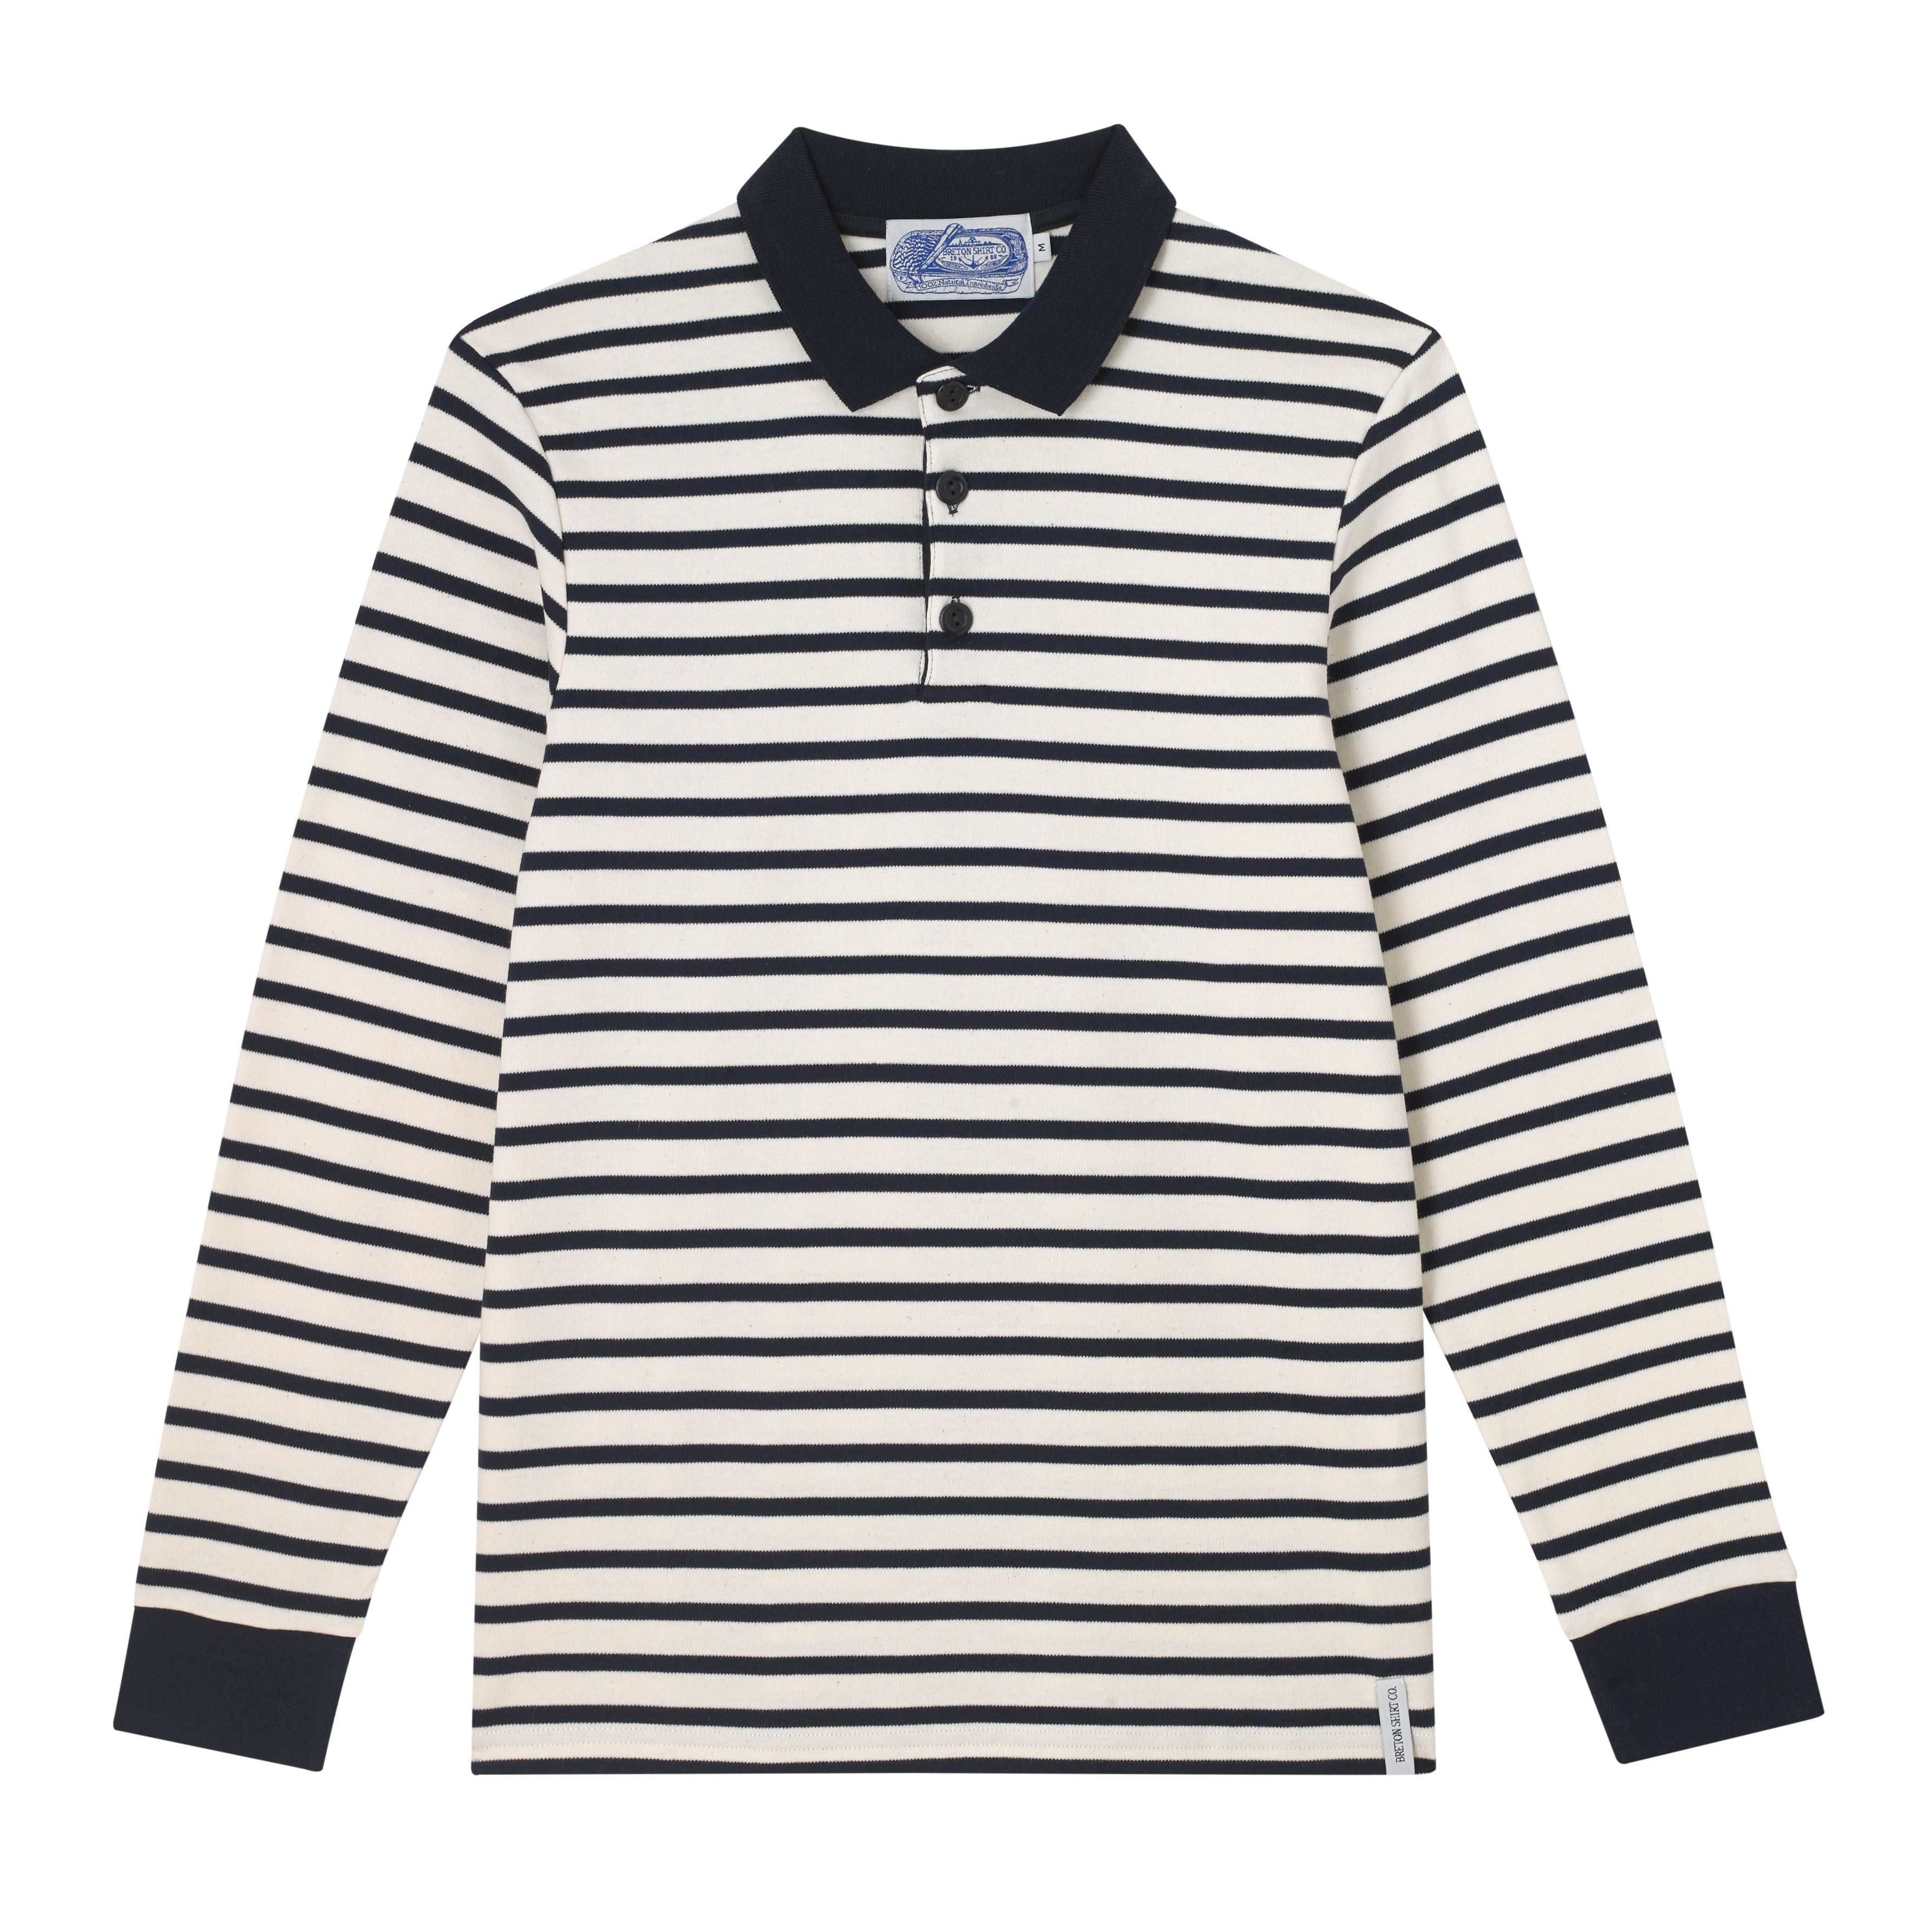 Striped Breton Shirts | T-Shirts & Tops | The Breton Shirt Company ...